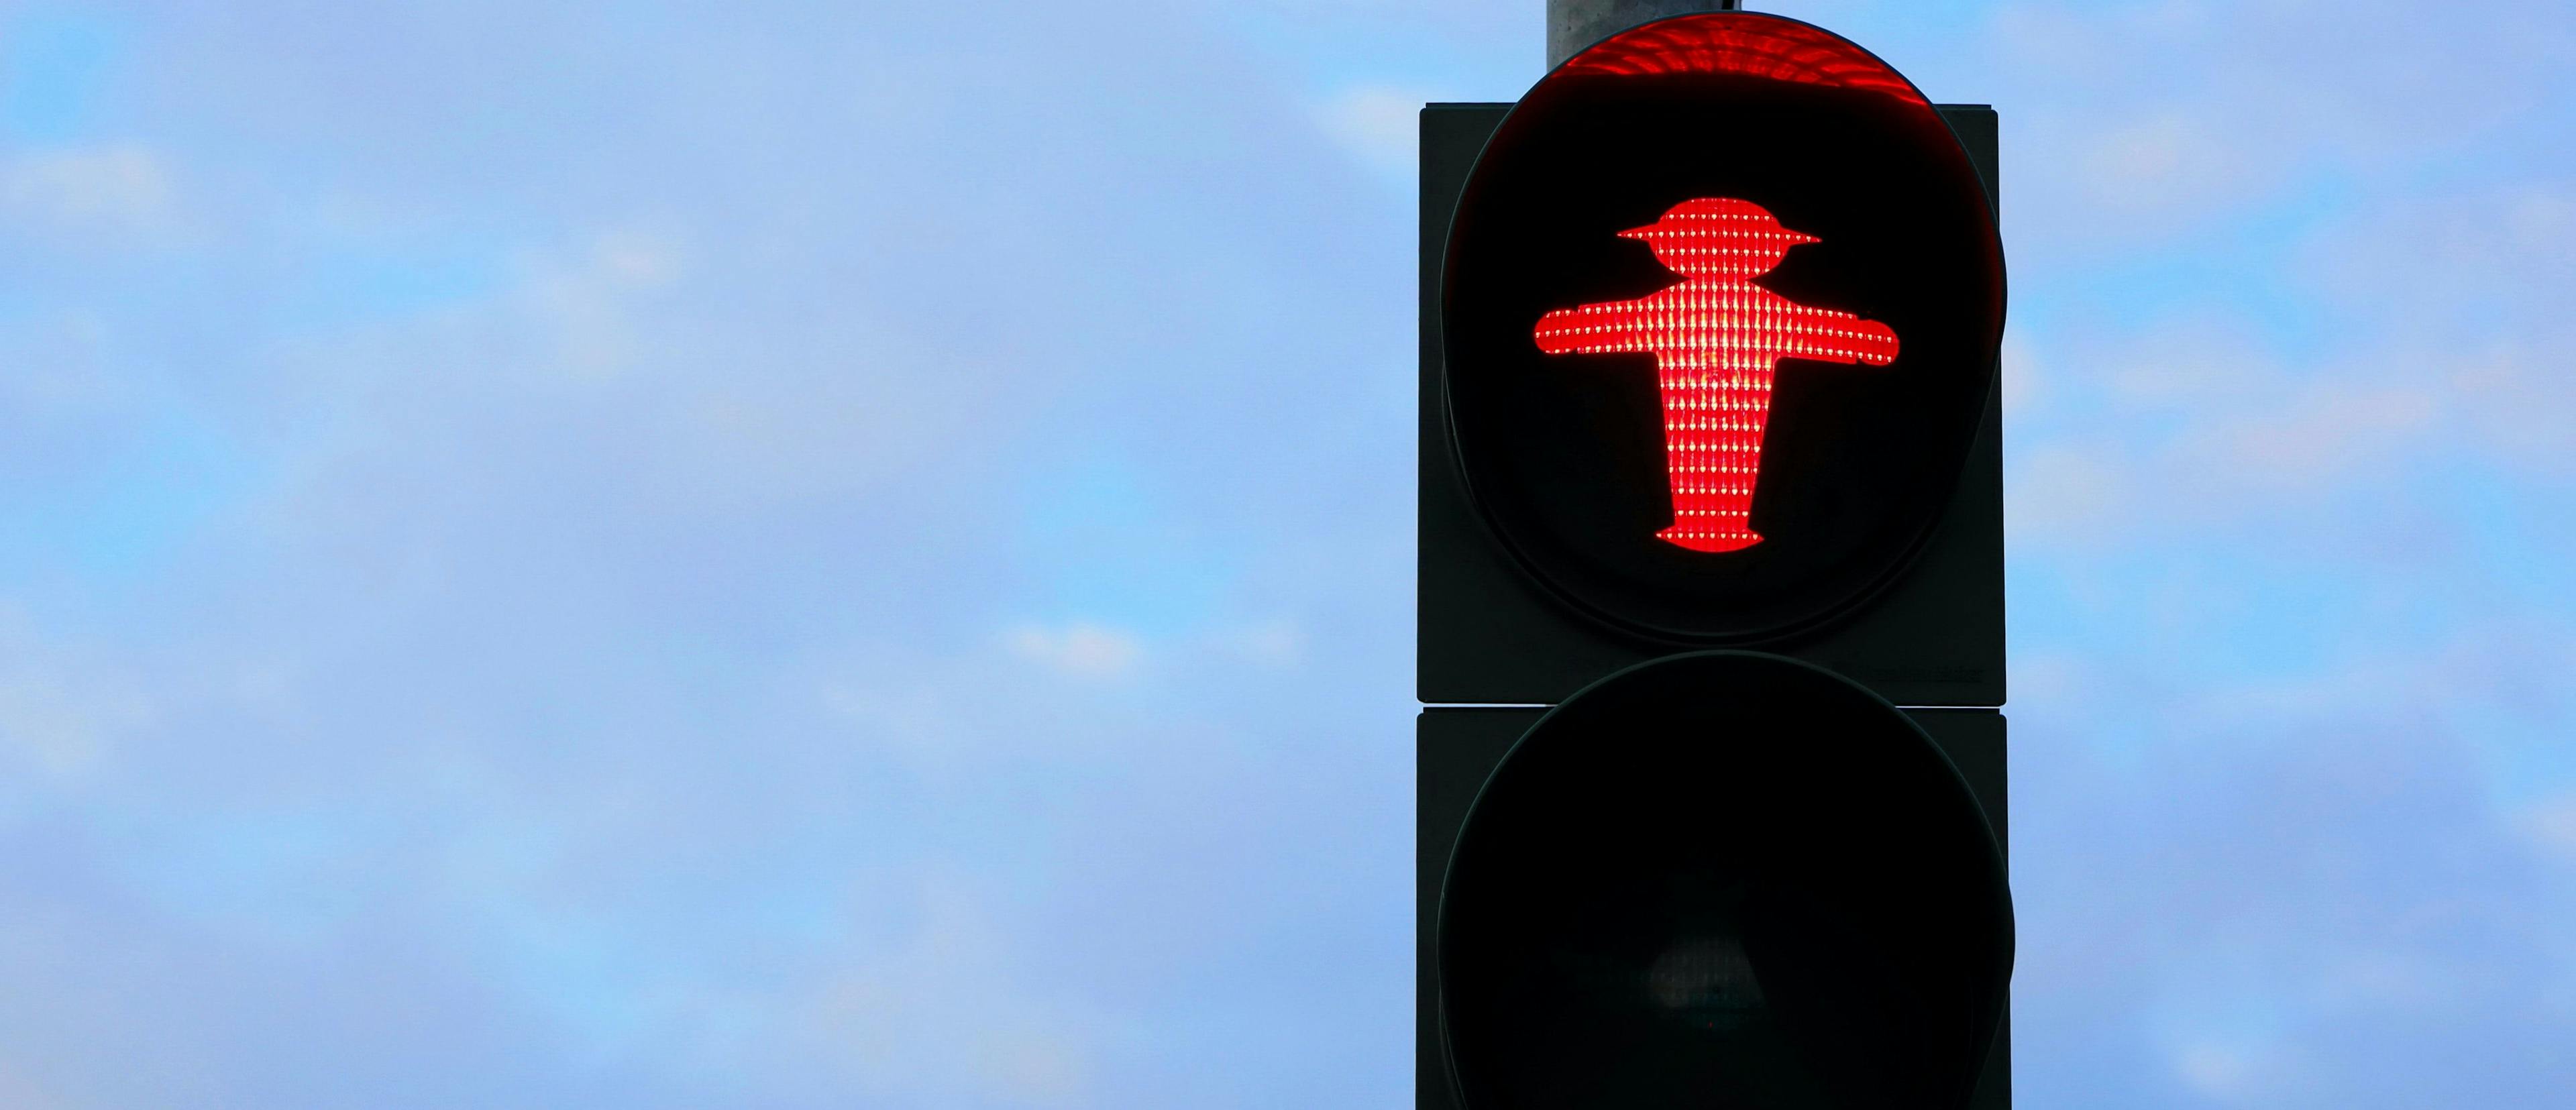 Red dont-cross traffic light